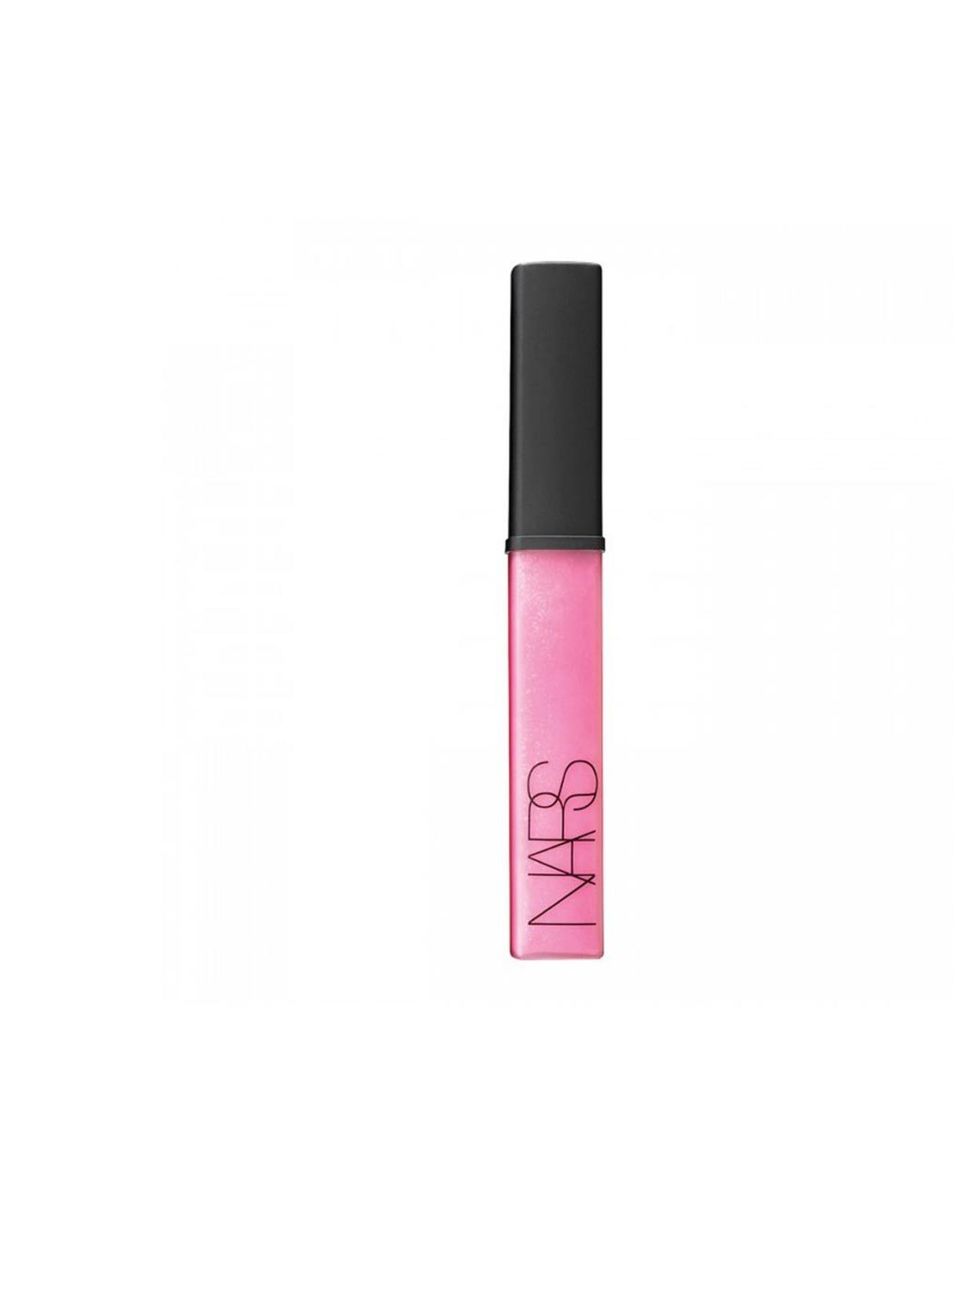 <p>Nars lip gloss in Angelika, £17.50, at <a href="http://www.harveynichols.com/beauty/categories/make-up-1/lips/s361203-nars-lip-gloss.html?colour=SUPER+ORGASM">Harvey Nichols</a></p>